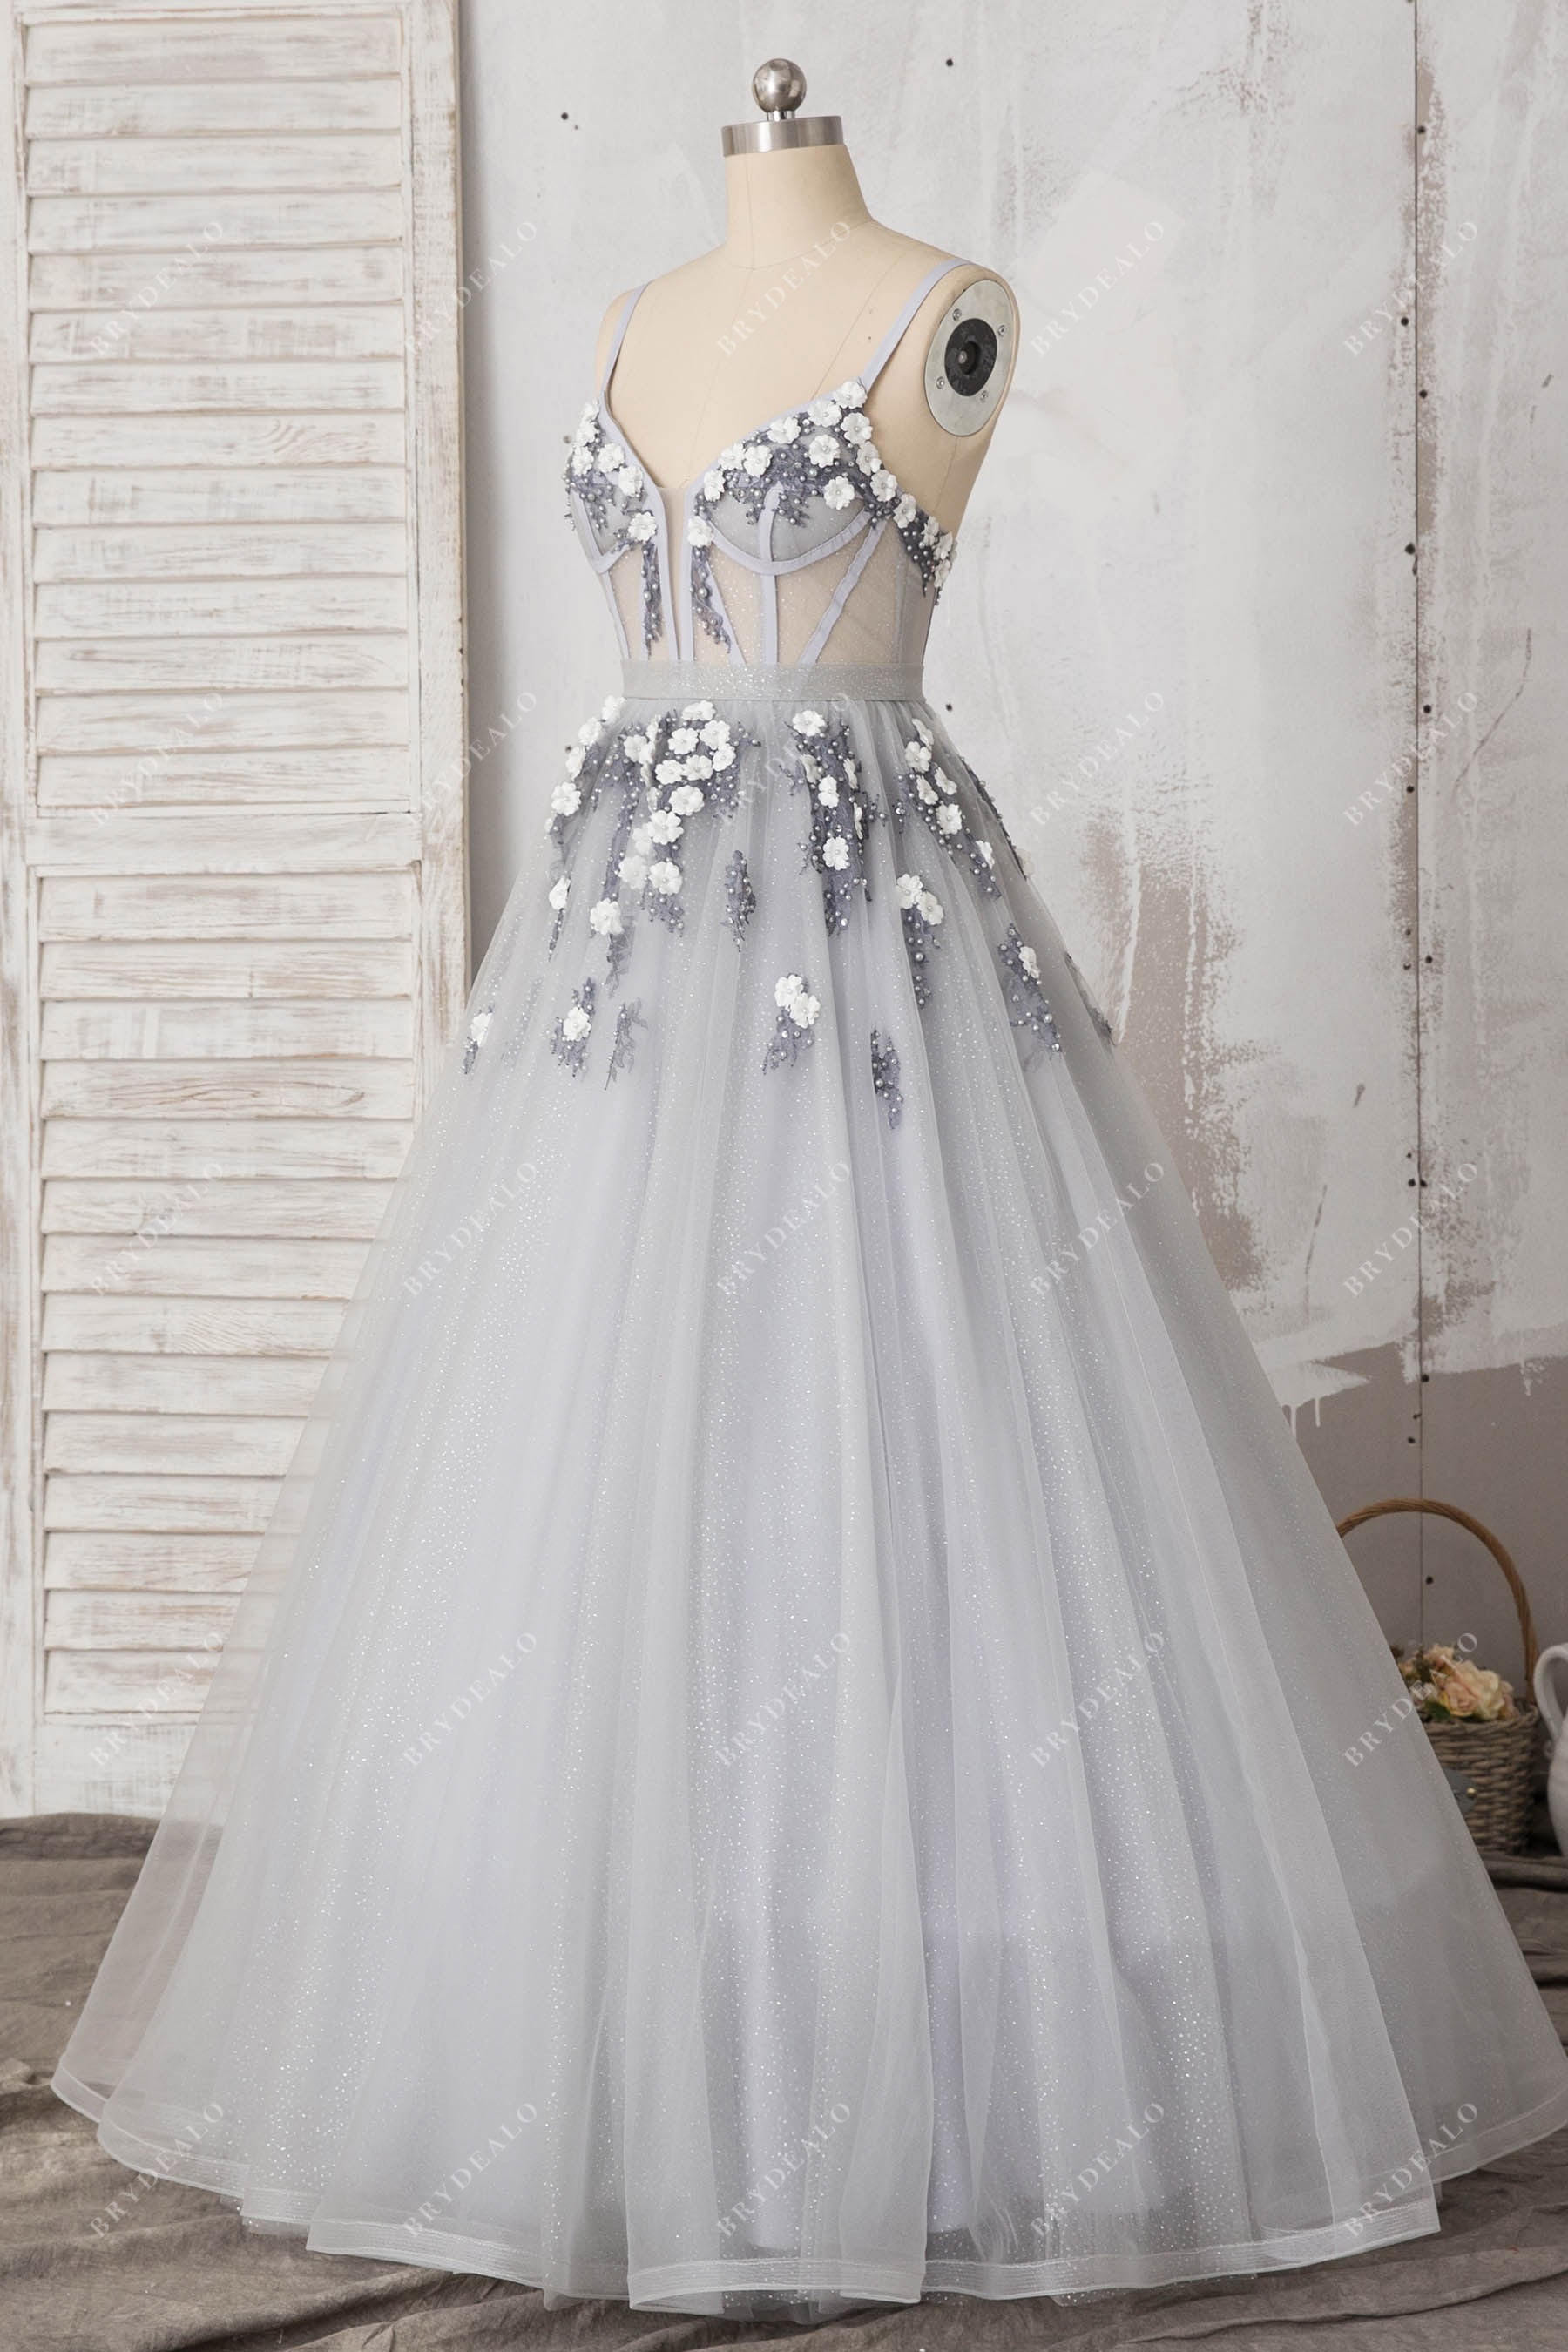 Flower Silver Sweetheart Corset Prom Dress